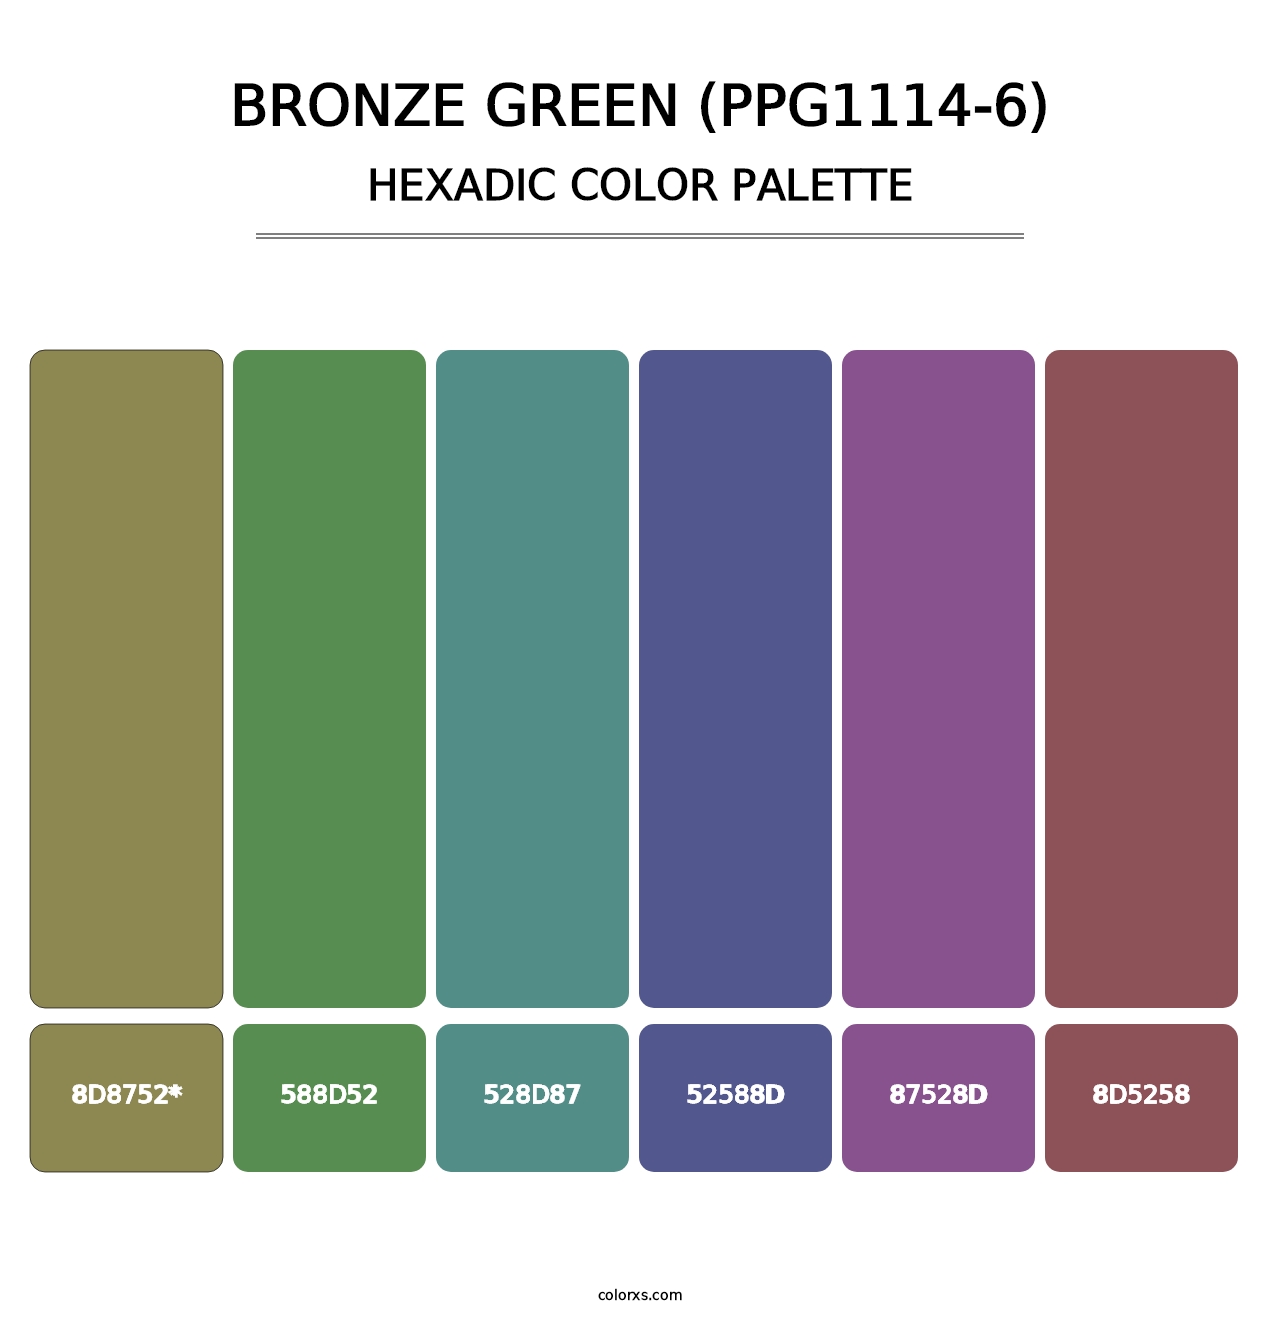 Bronze Green (PPG1114-6) - Hexadic Color Palette